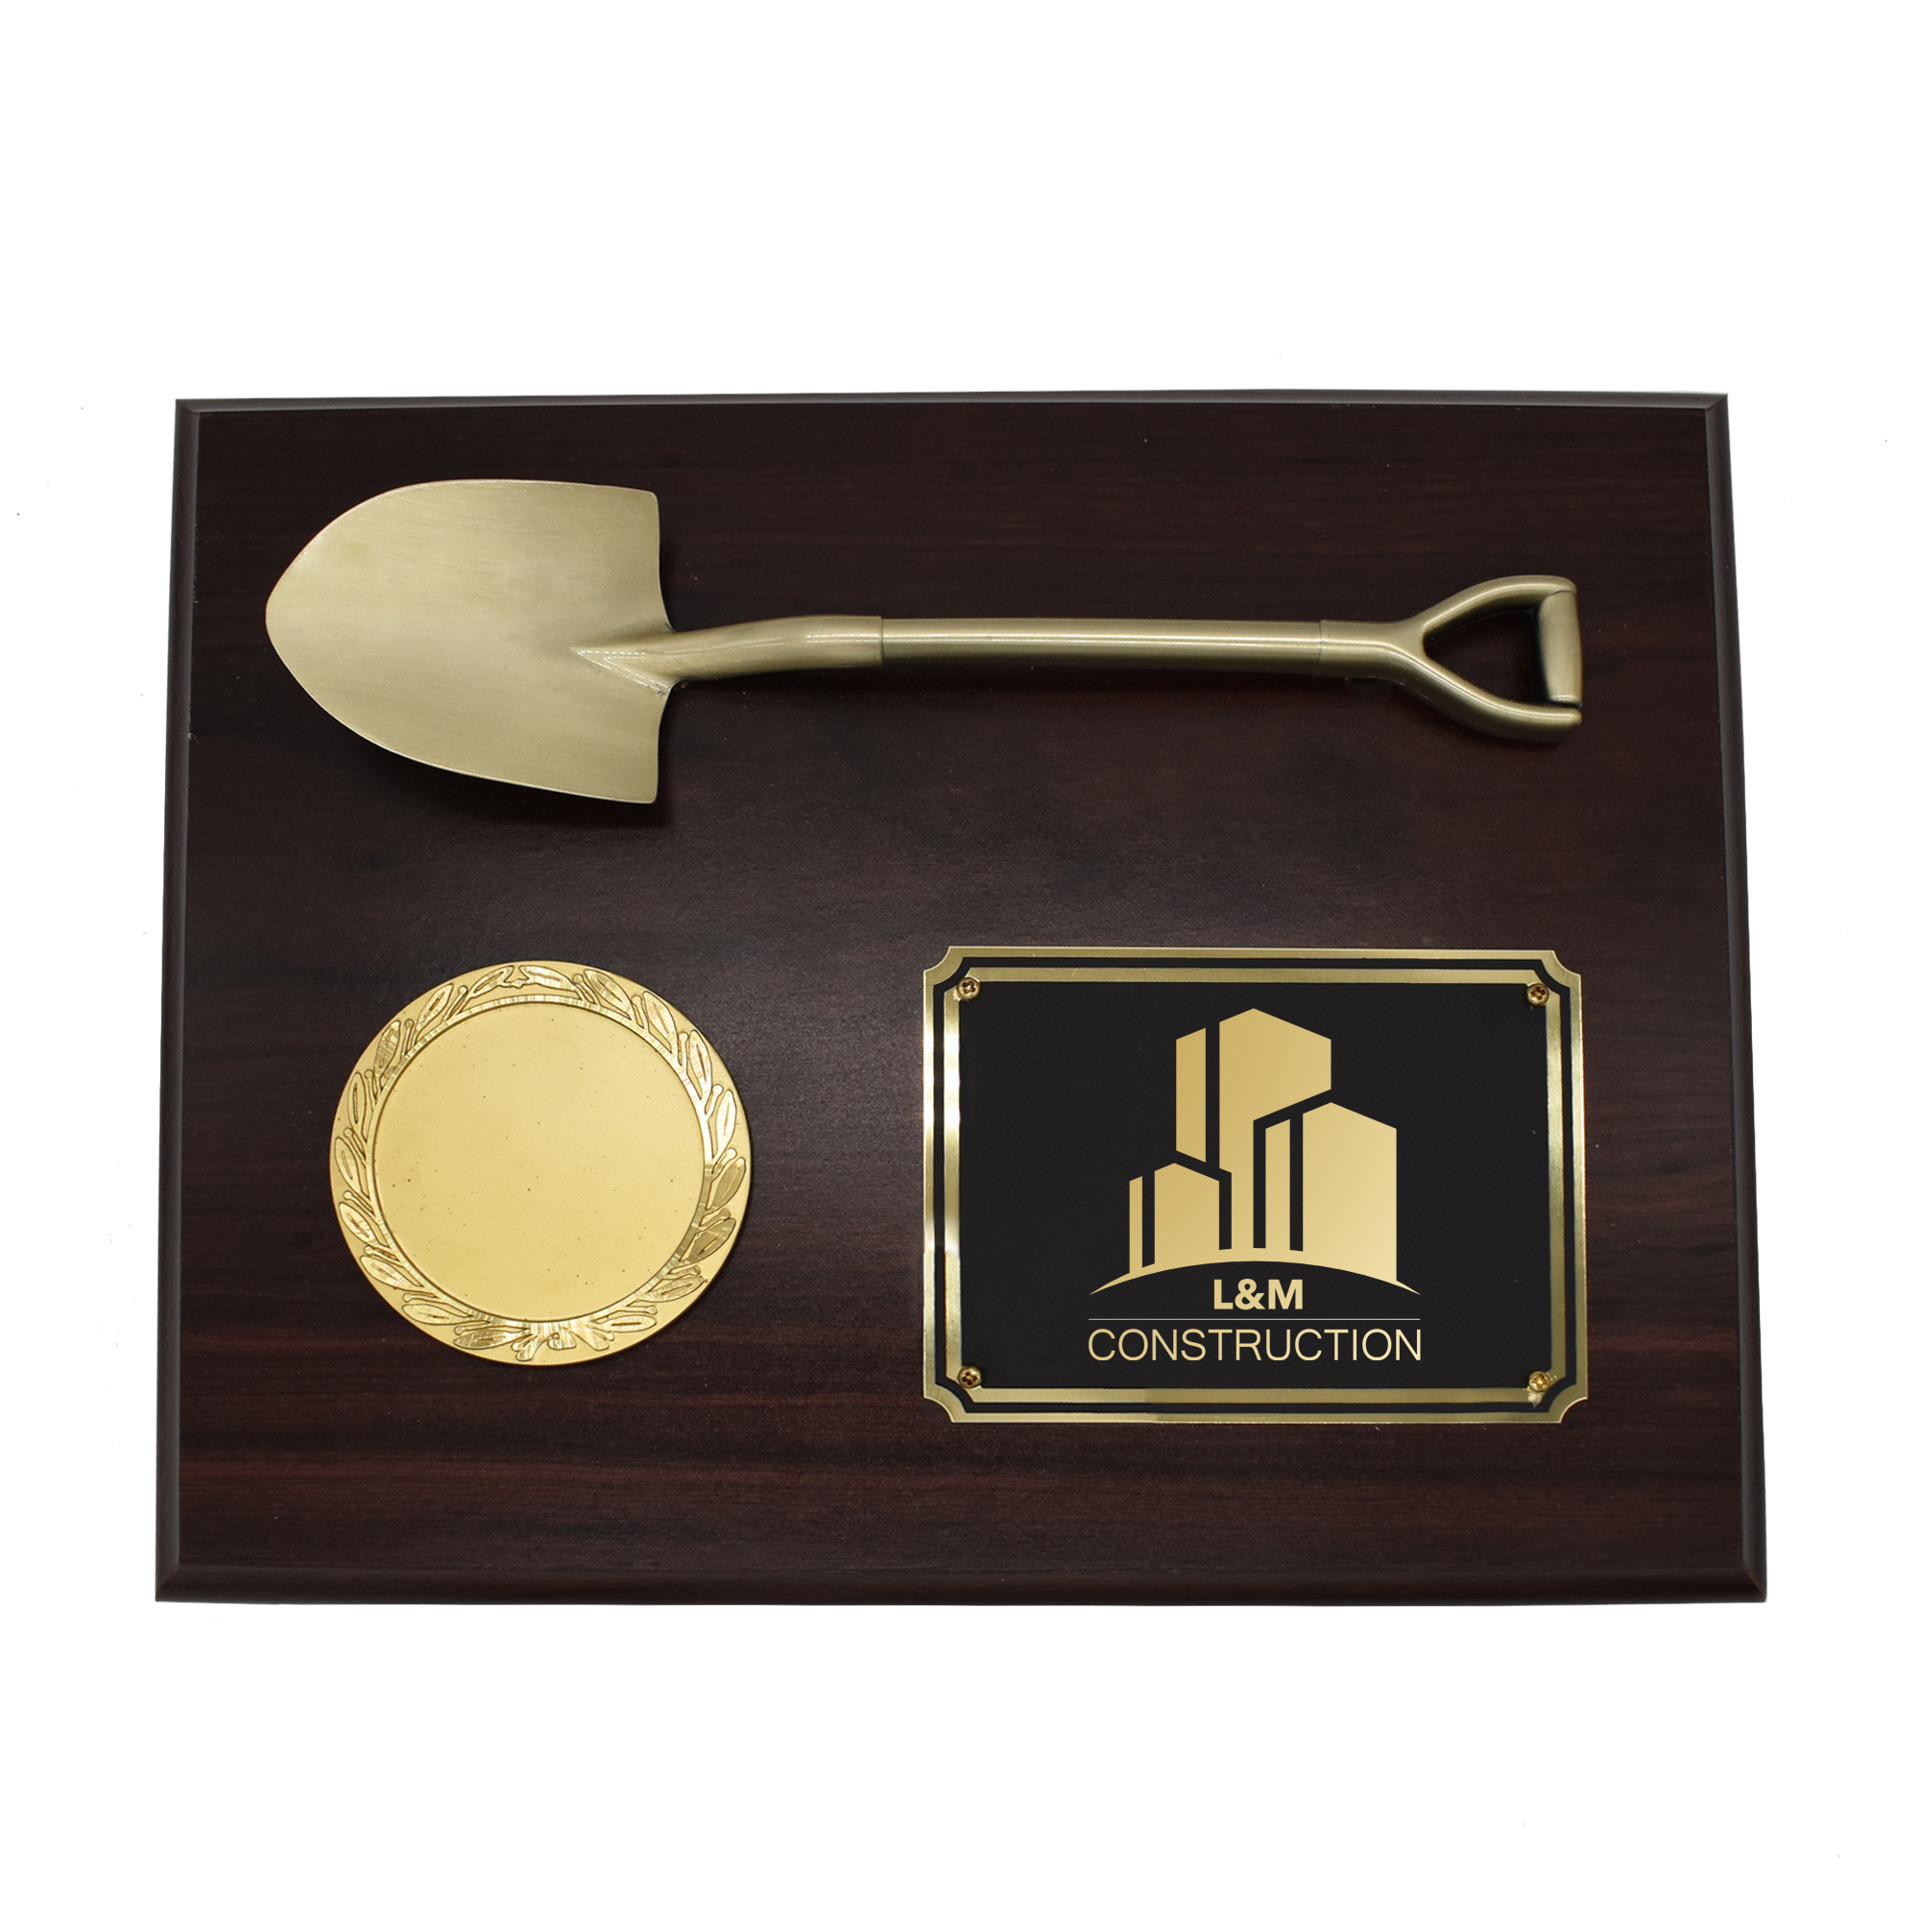 Ceremonial Shovel Bows for Full Size Ceremonial Shovels - Engraving, Awards  & Gifts